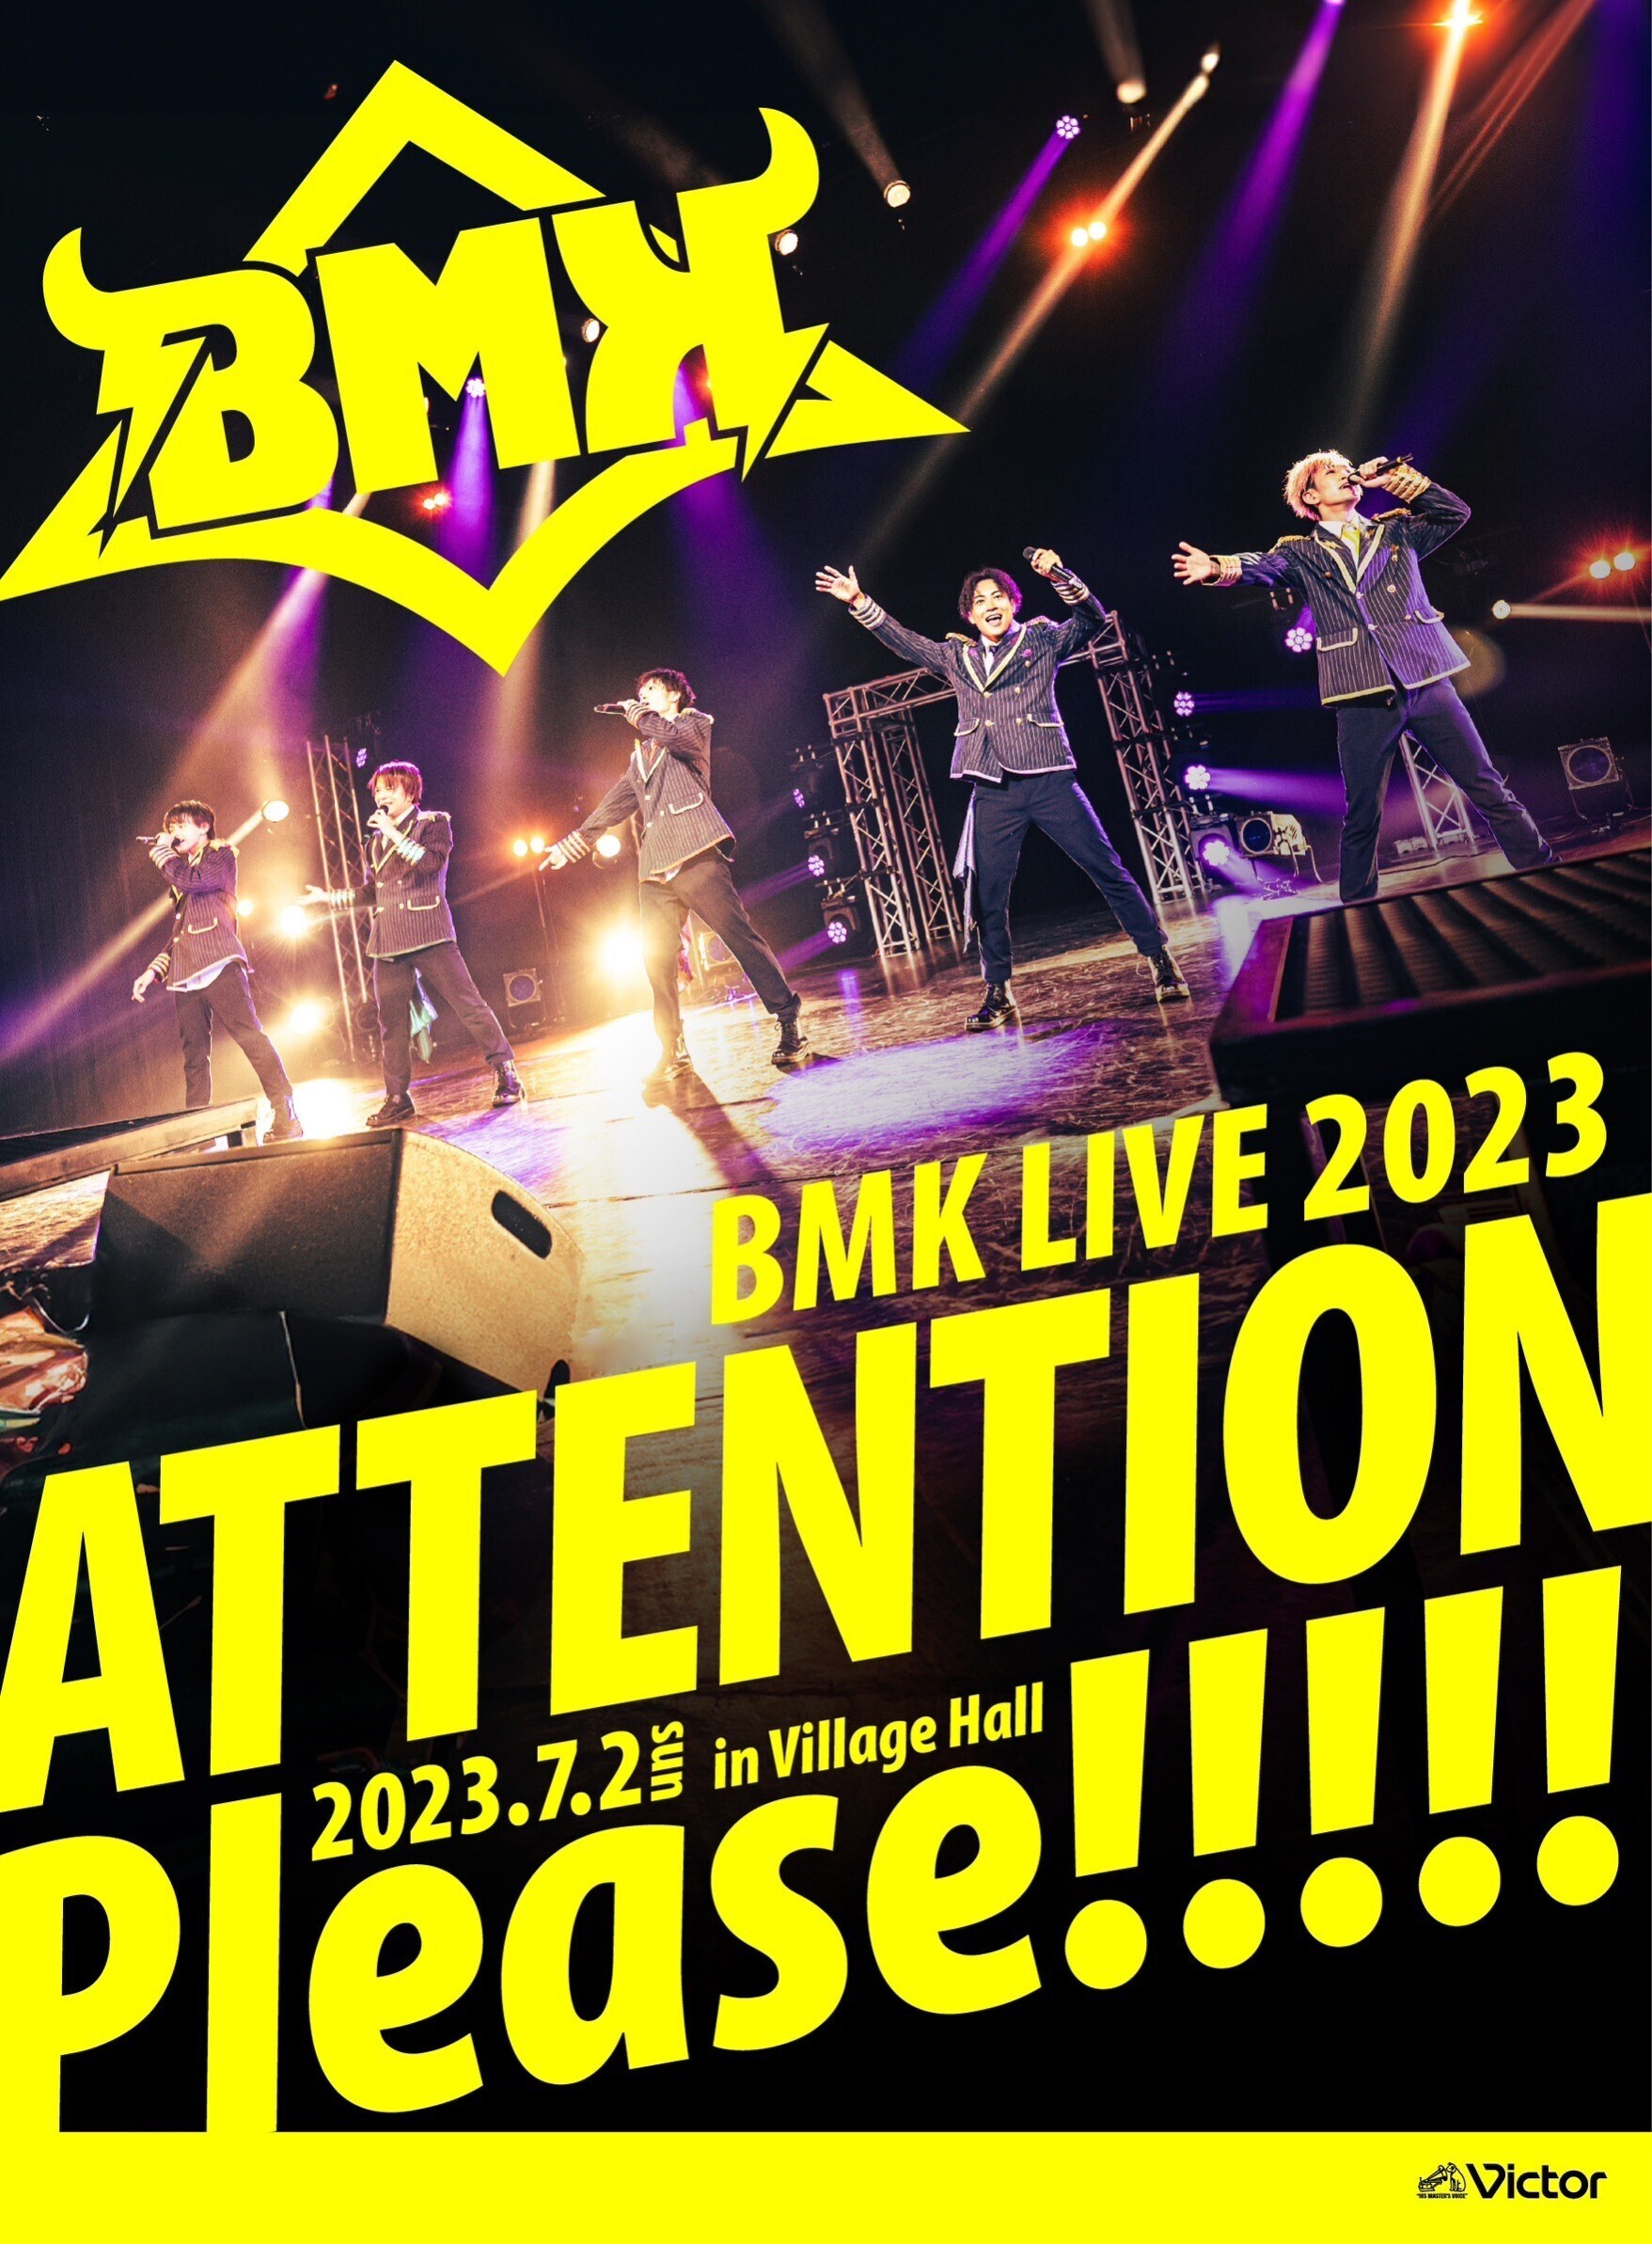 BMK LIVE Blu-ray「BMK LIVE 2023～ATTENTION Please!!!!!」